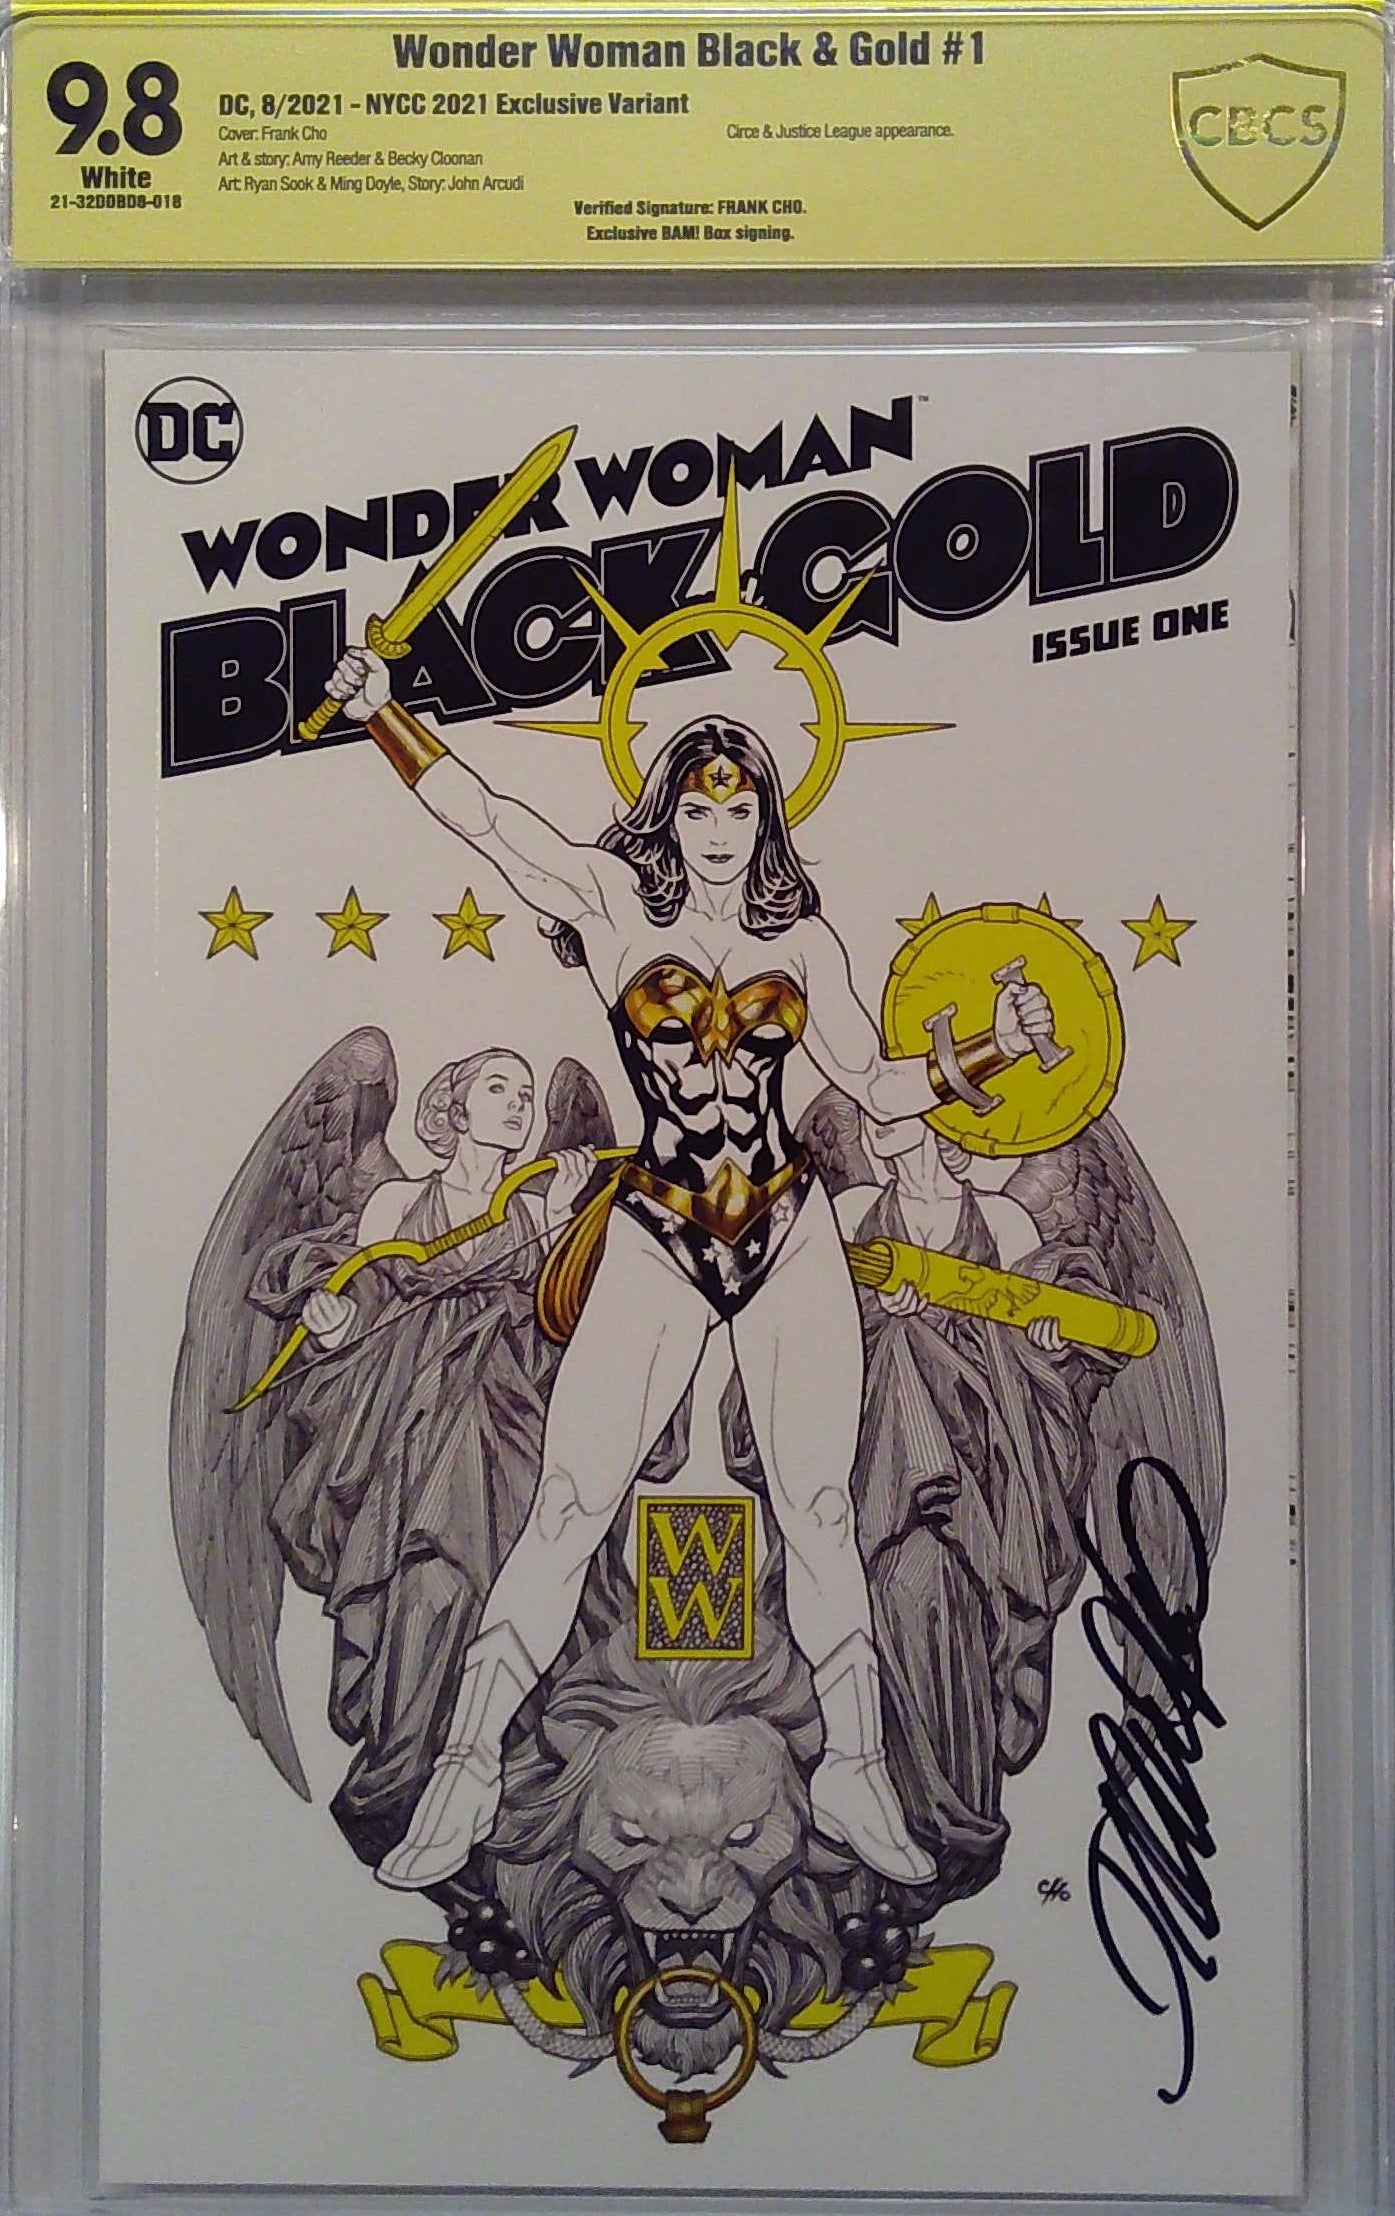 Wonder Woman Black & Gold #1 CBCS Yellow Label 9.8 DC Comics Exclusive Variant Frank Cho